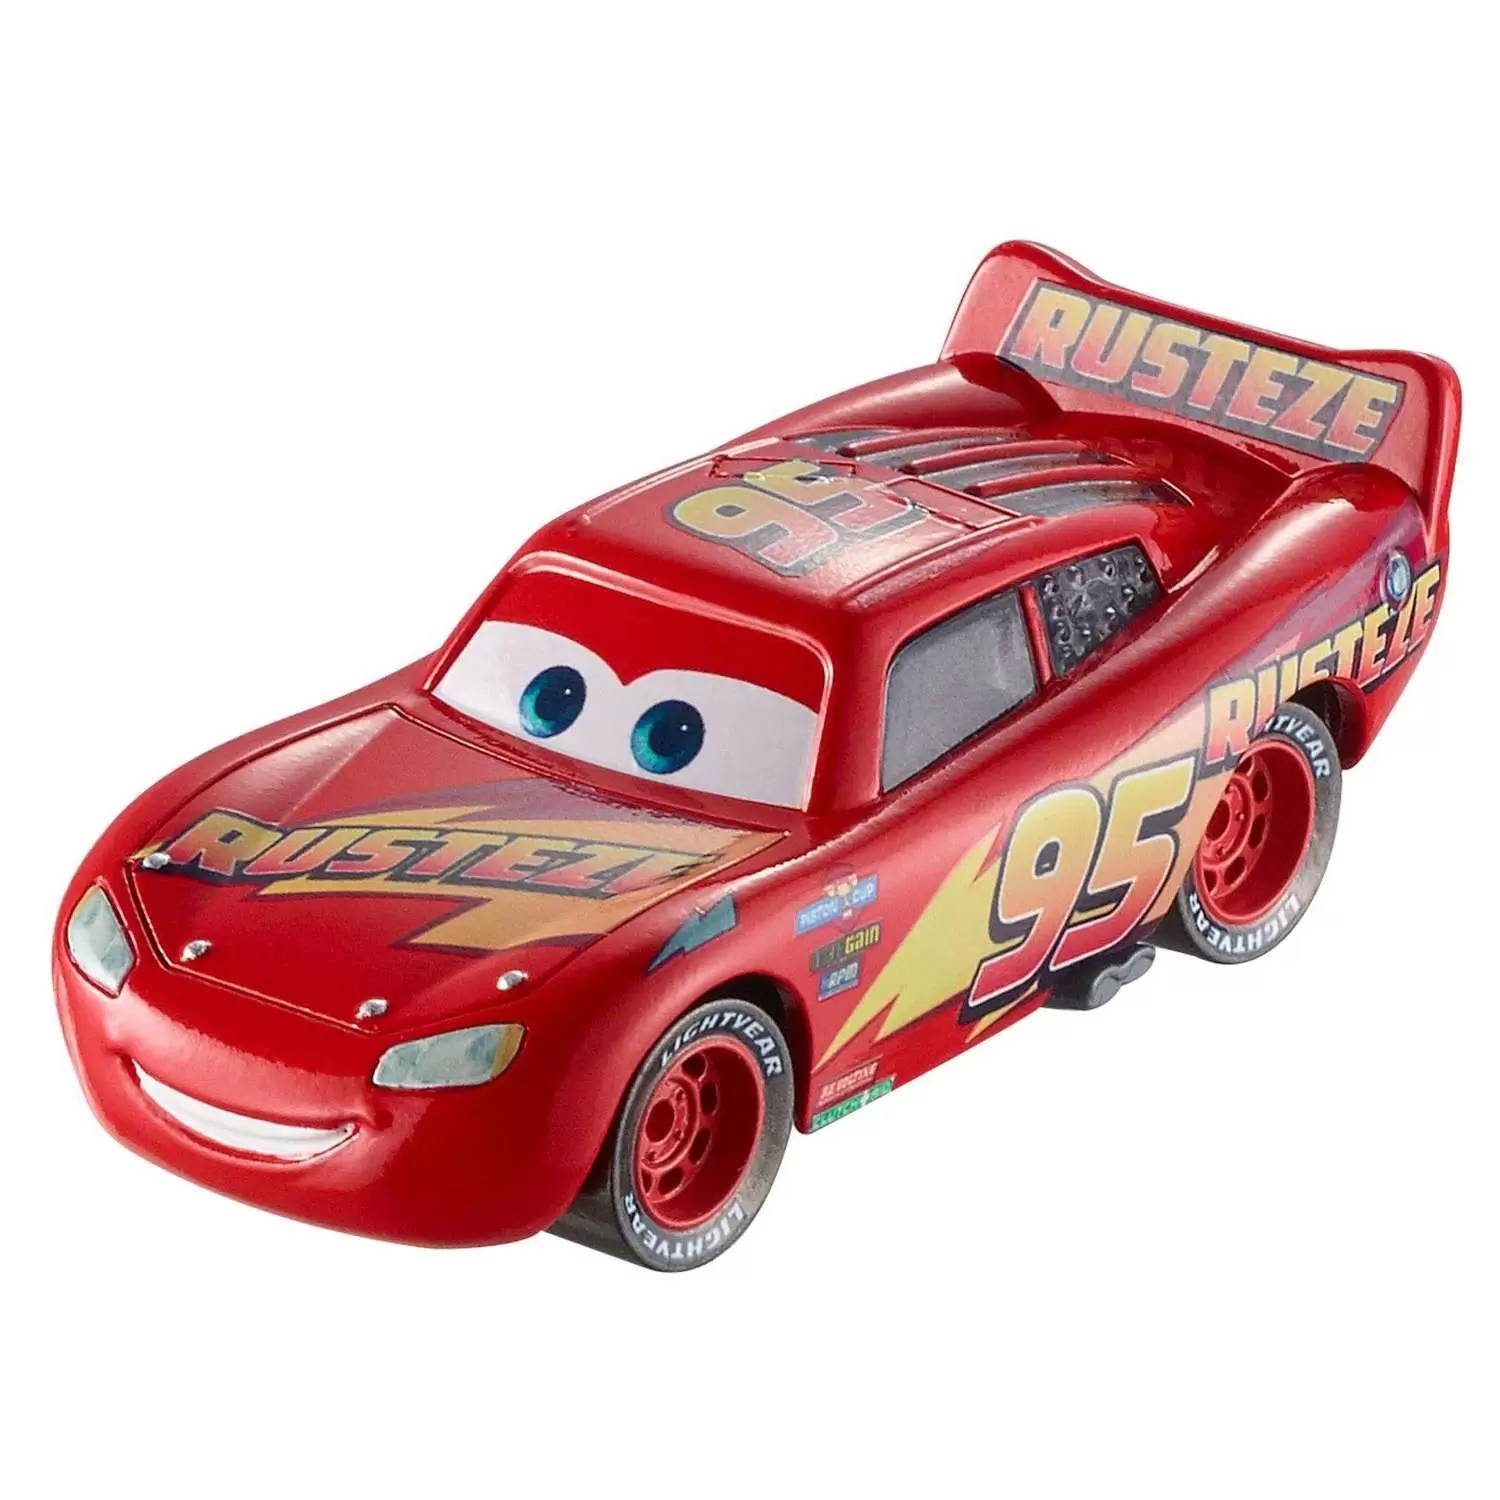 Cars 3 models - Hero/Rust-Eze Lightning McQueen